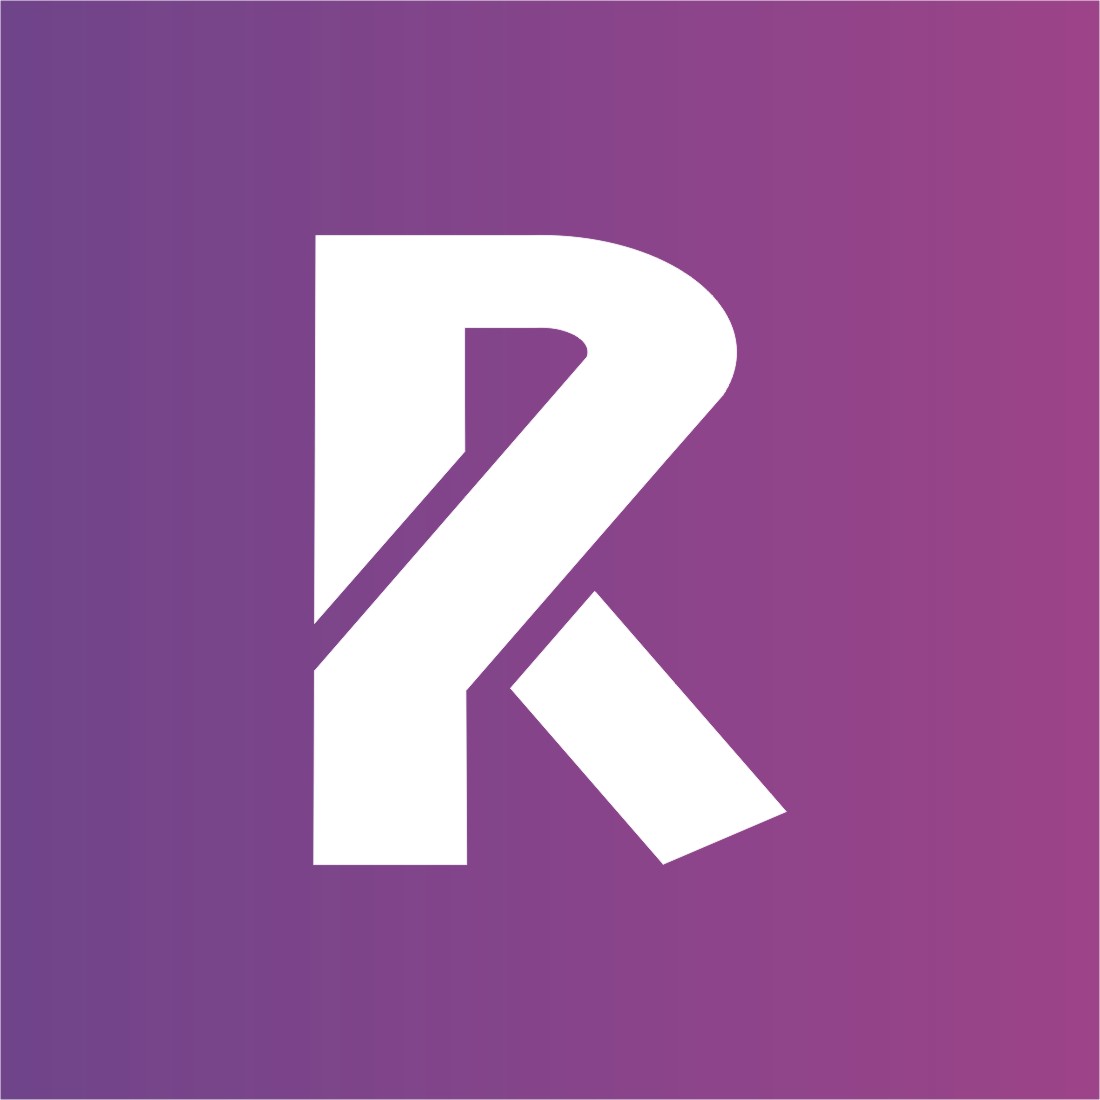 RK Logo Design Graphic by StrangerStudio · Creative Fabrica